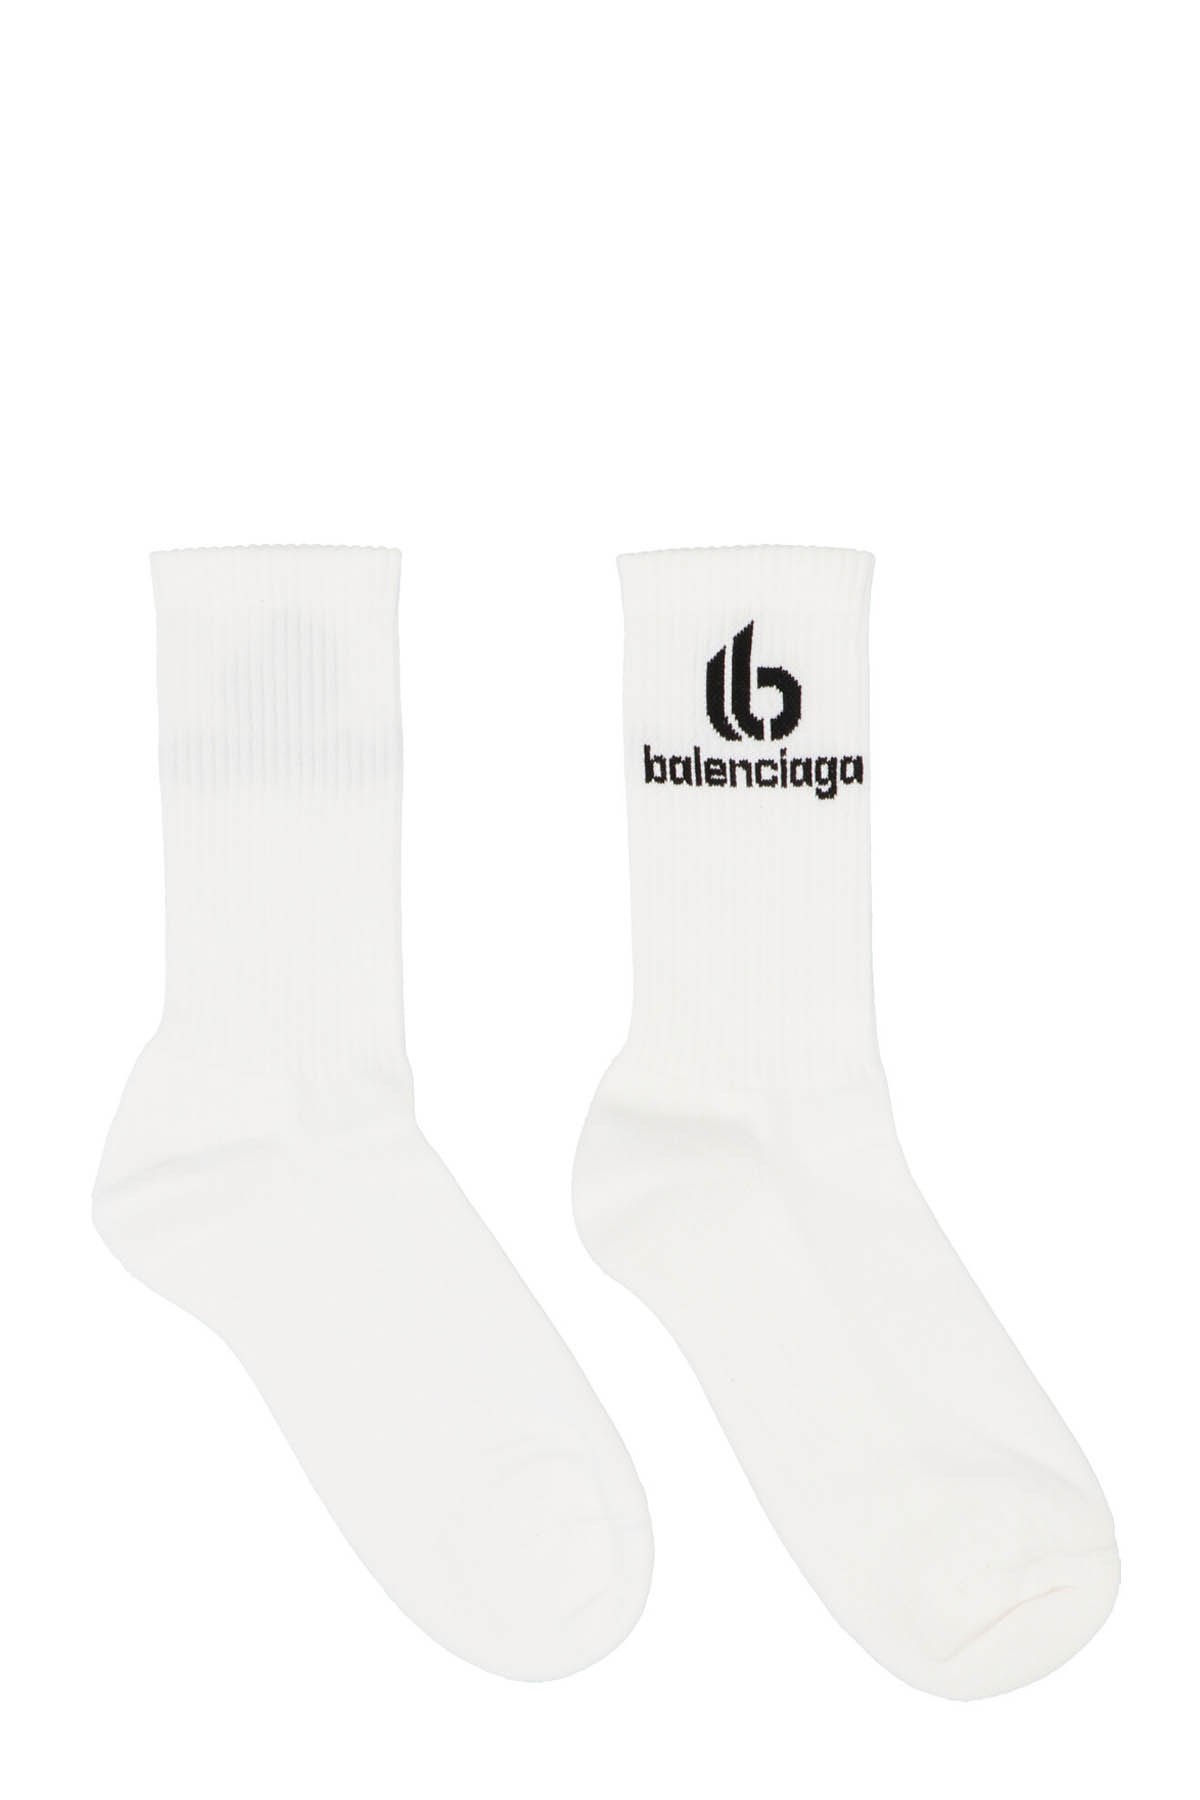 BALENCIAGA 'Double B’ Socks